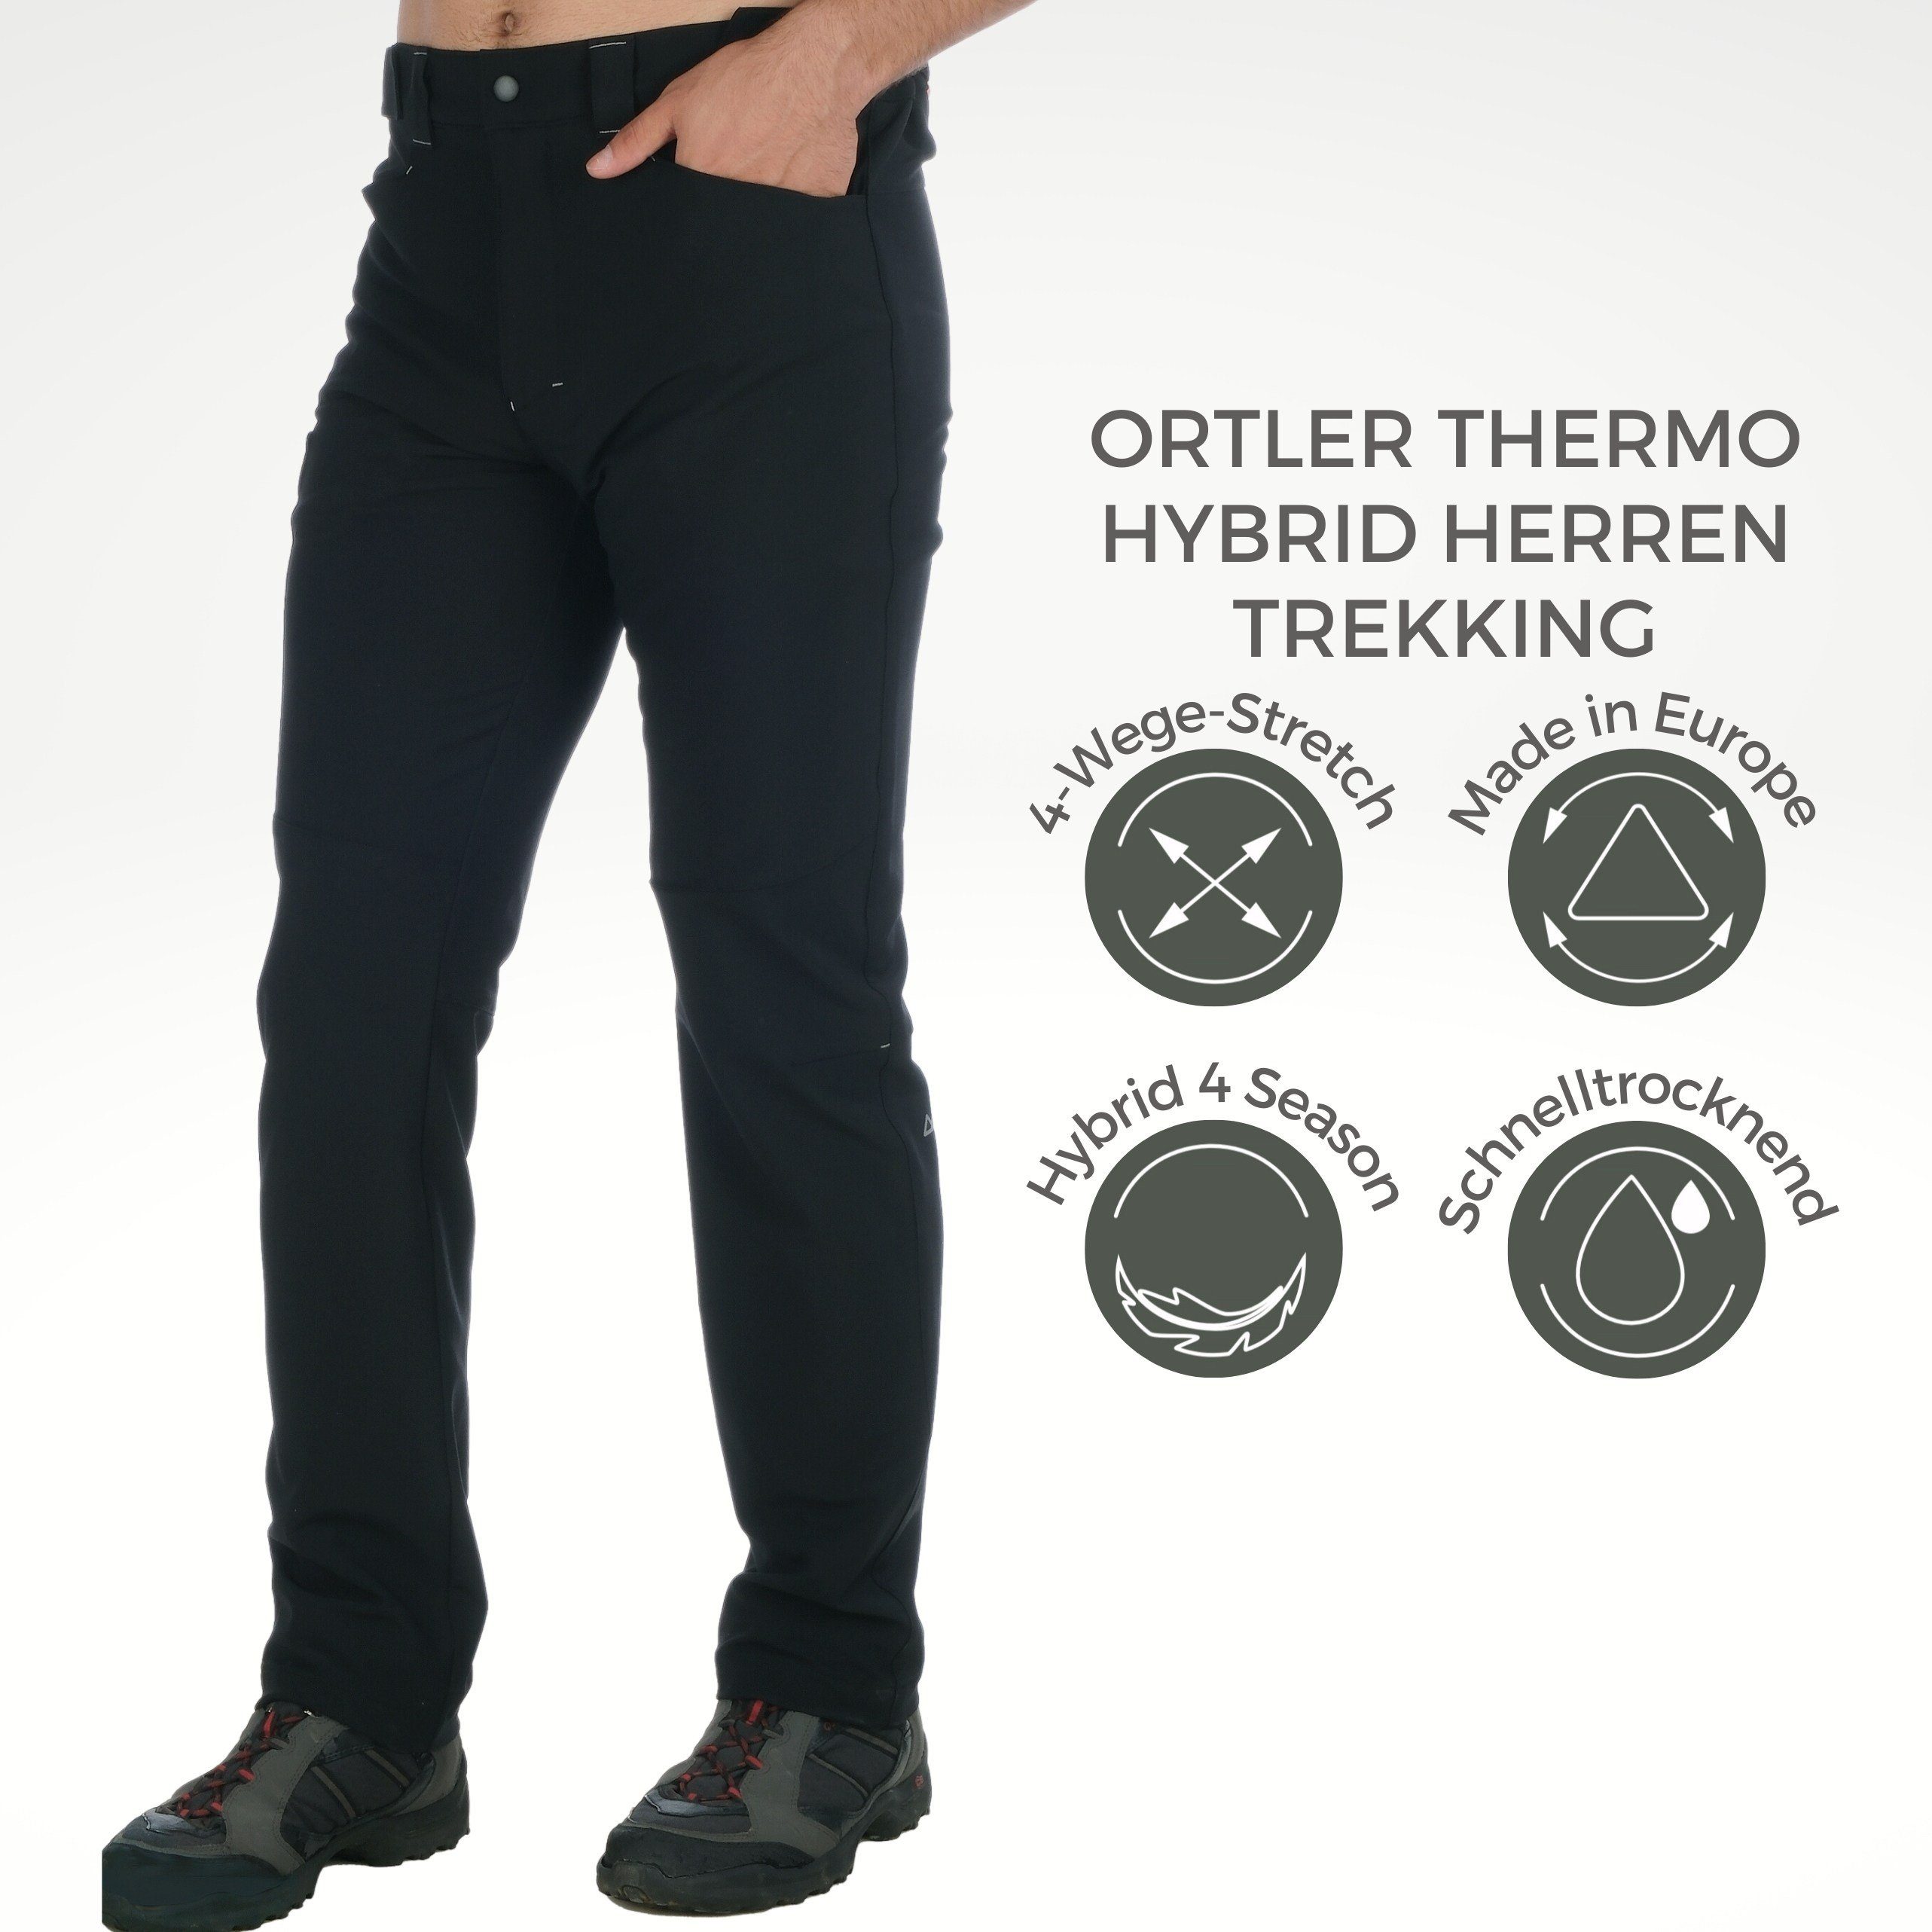 Kaymountain Trekkinghose Herren Wander Outdoor Hose Hybrid Thermo wasserdicht 52 Black Ortler